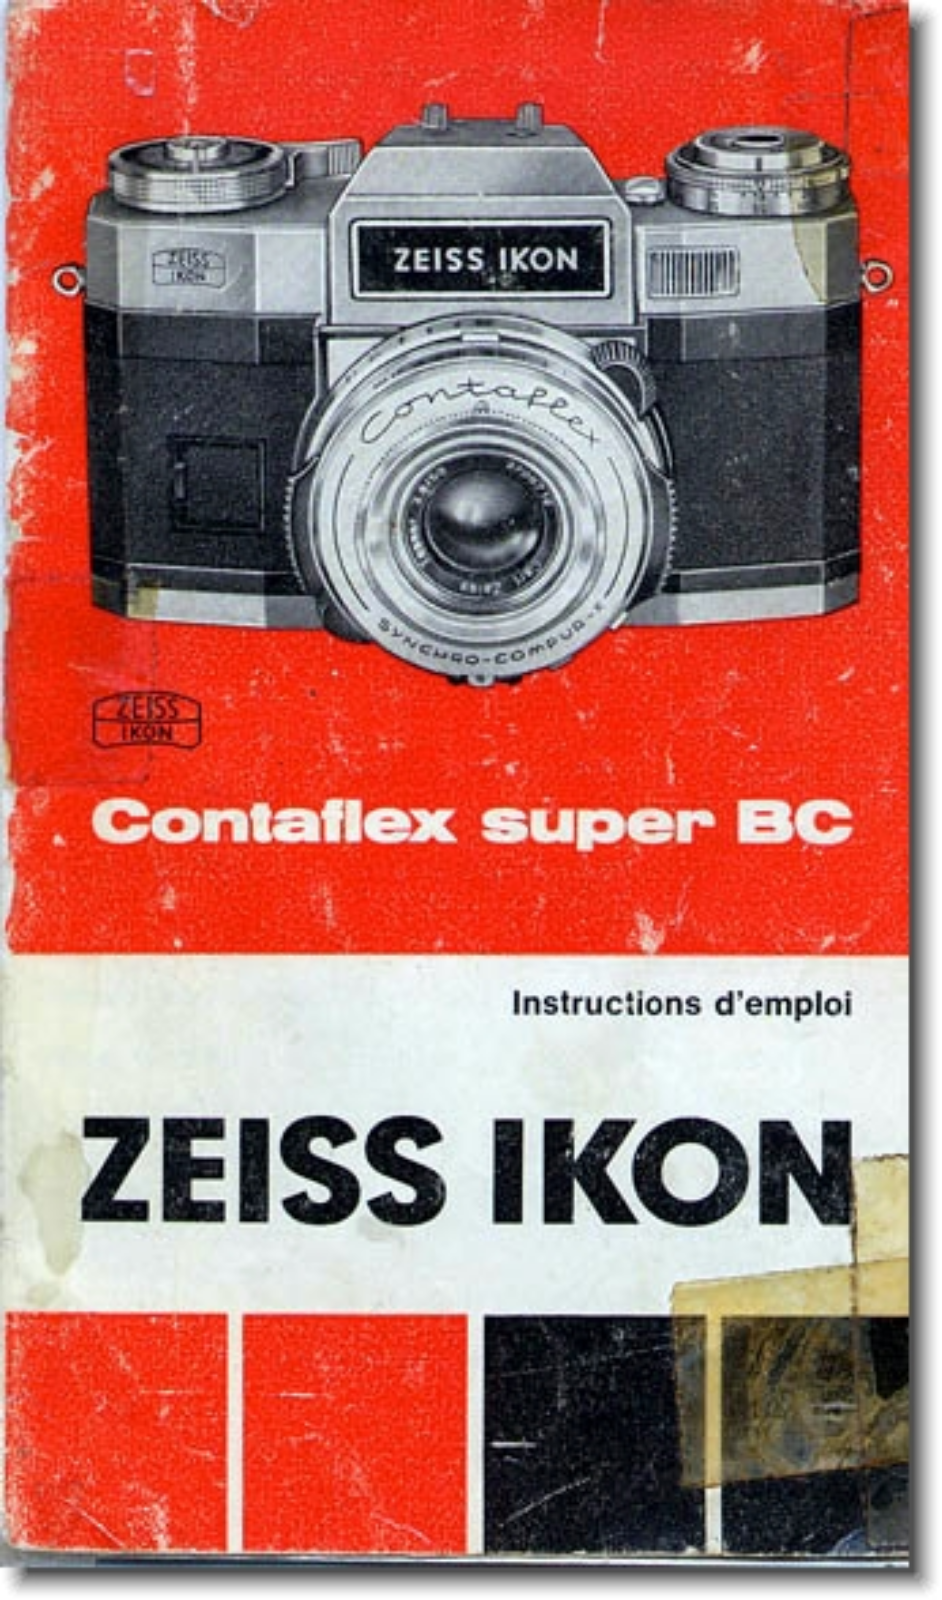 ZEISS IKON Contaflex Super BC Instruction Manual